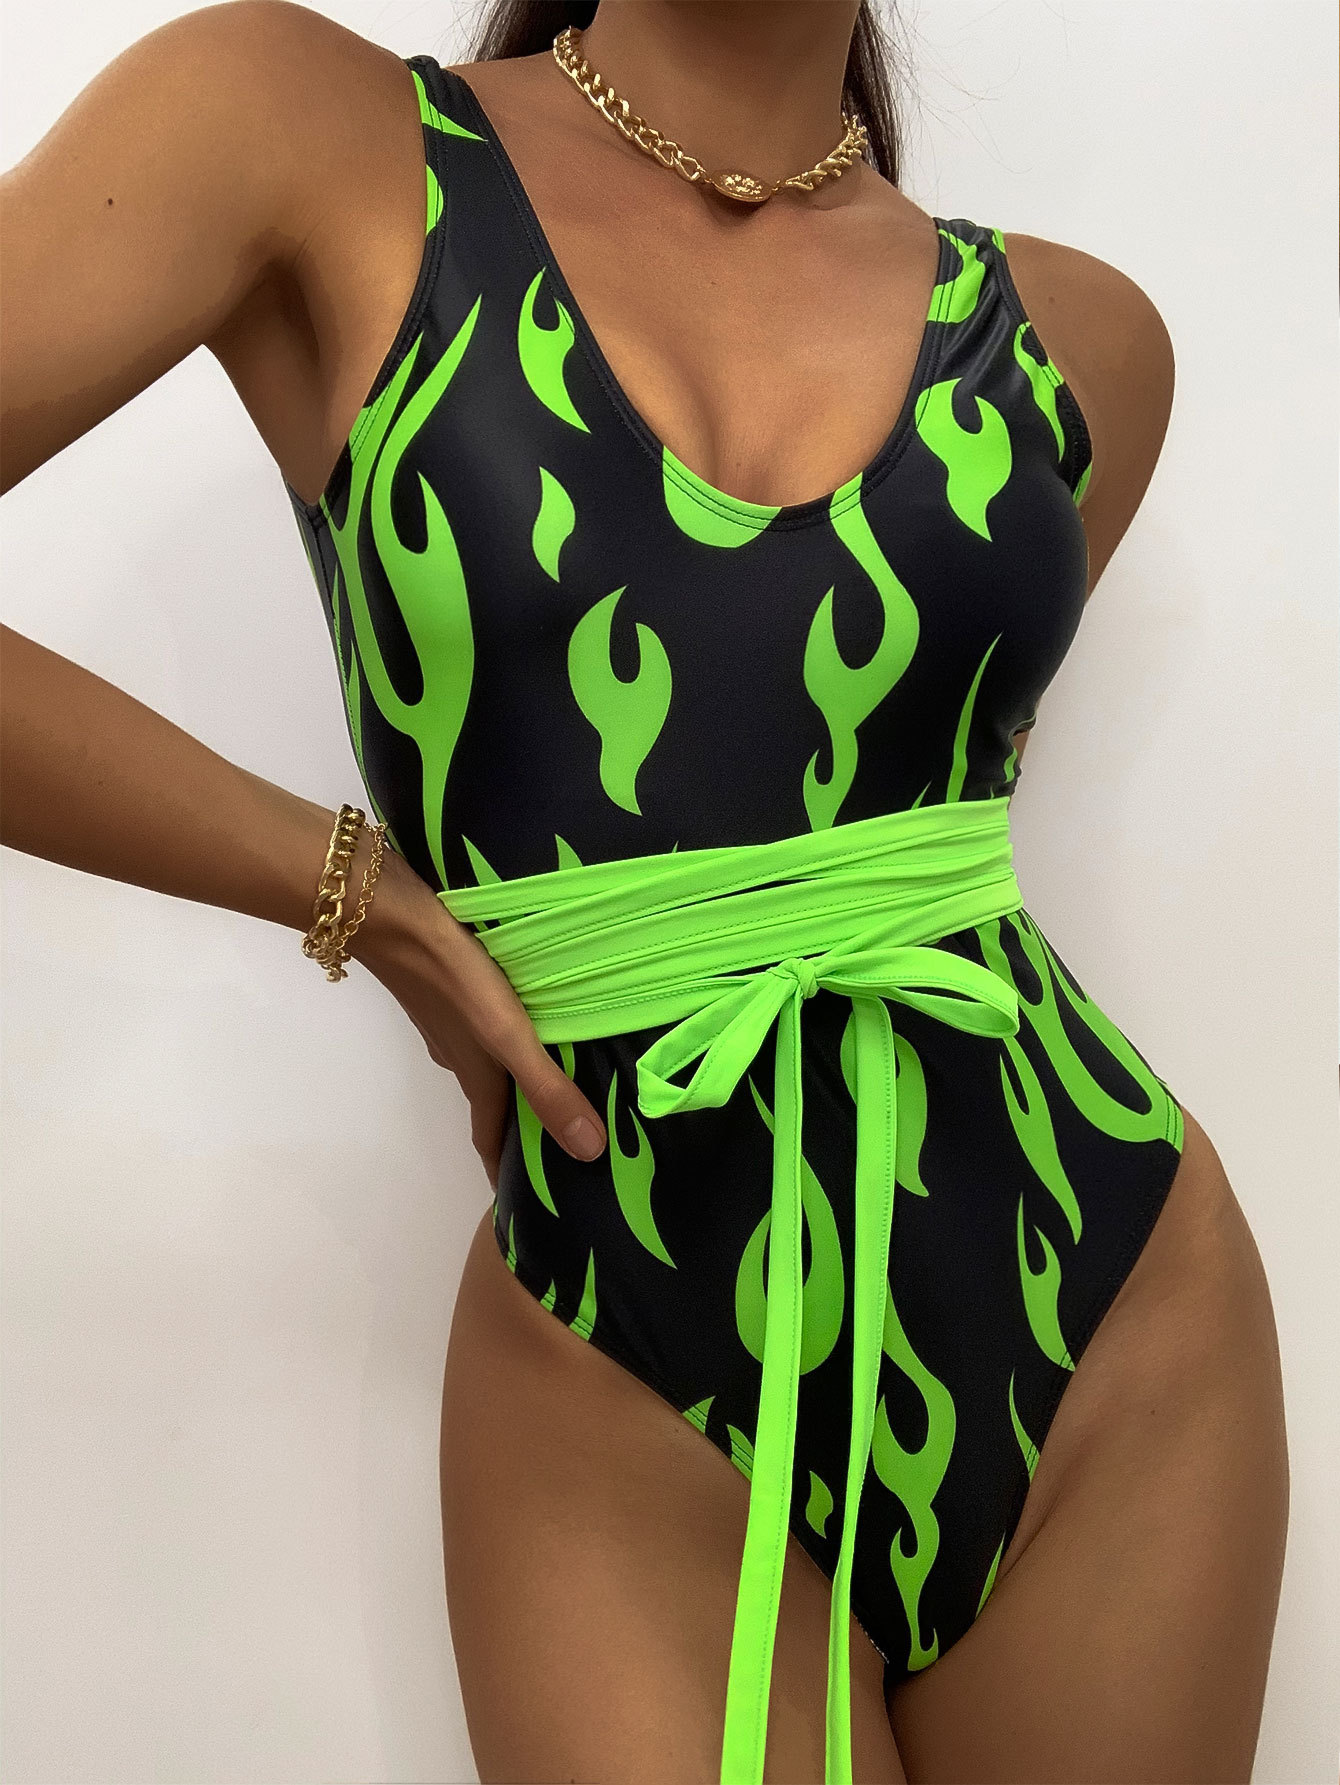 Swim Suit Fluorescent green Swimwear Women One-piece Printing Bikini Bathing Swim Suit